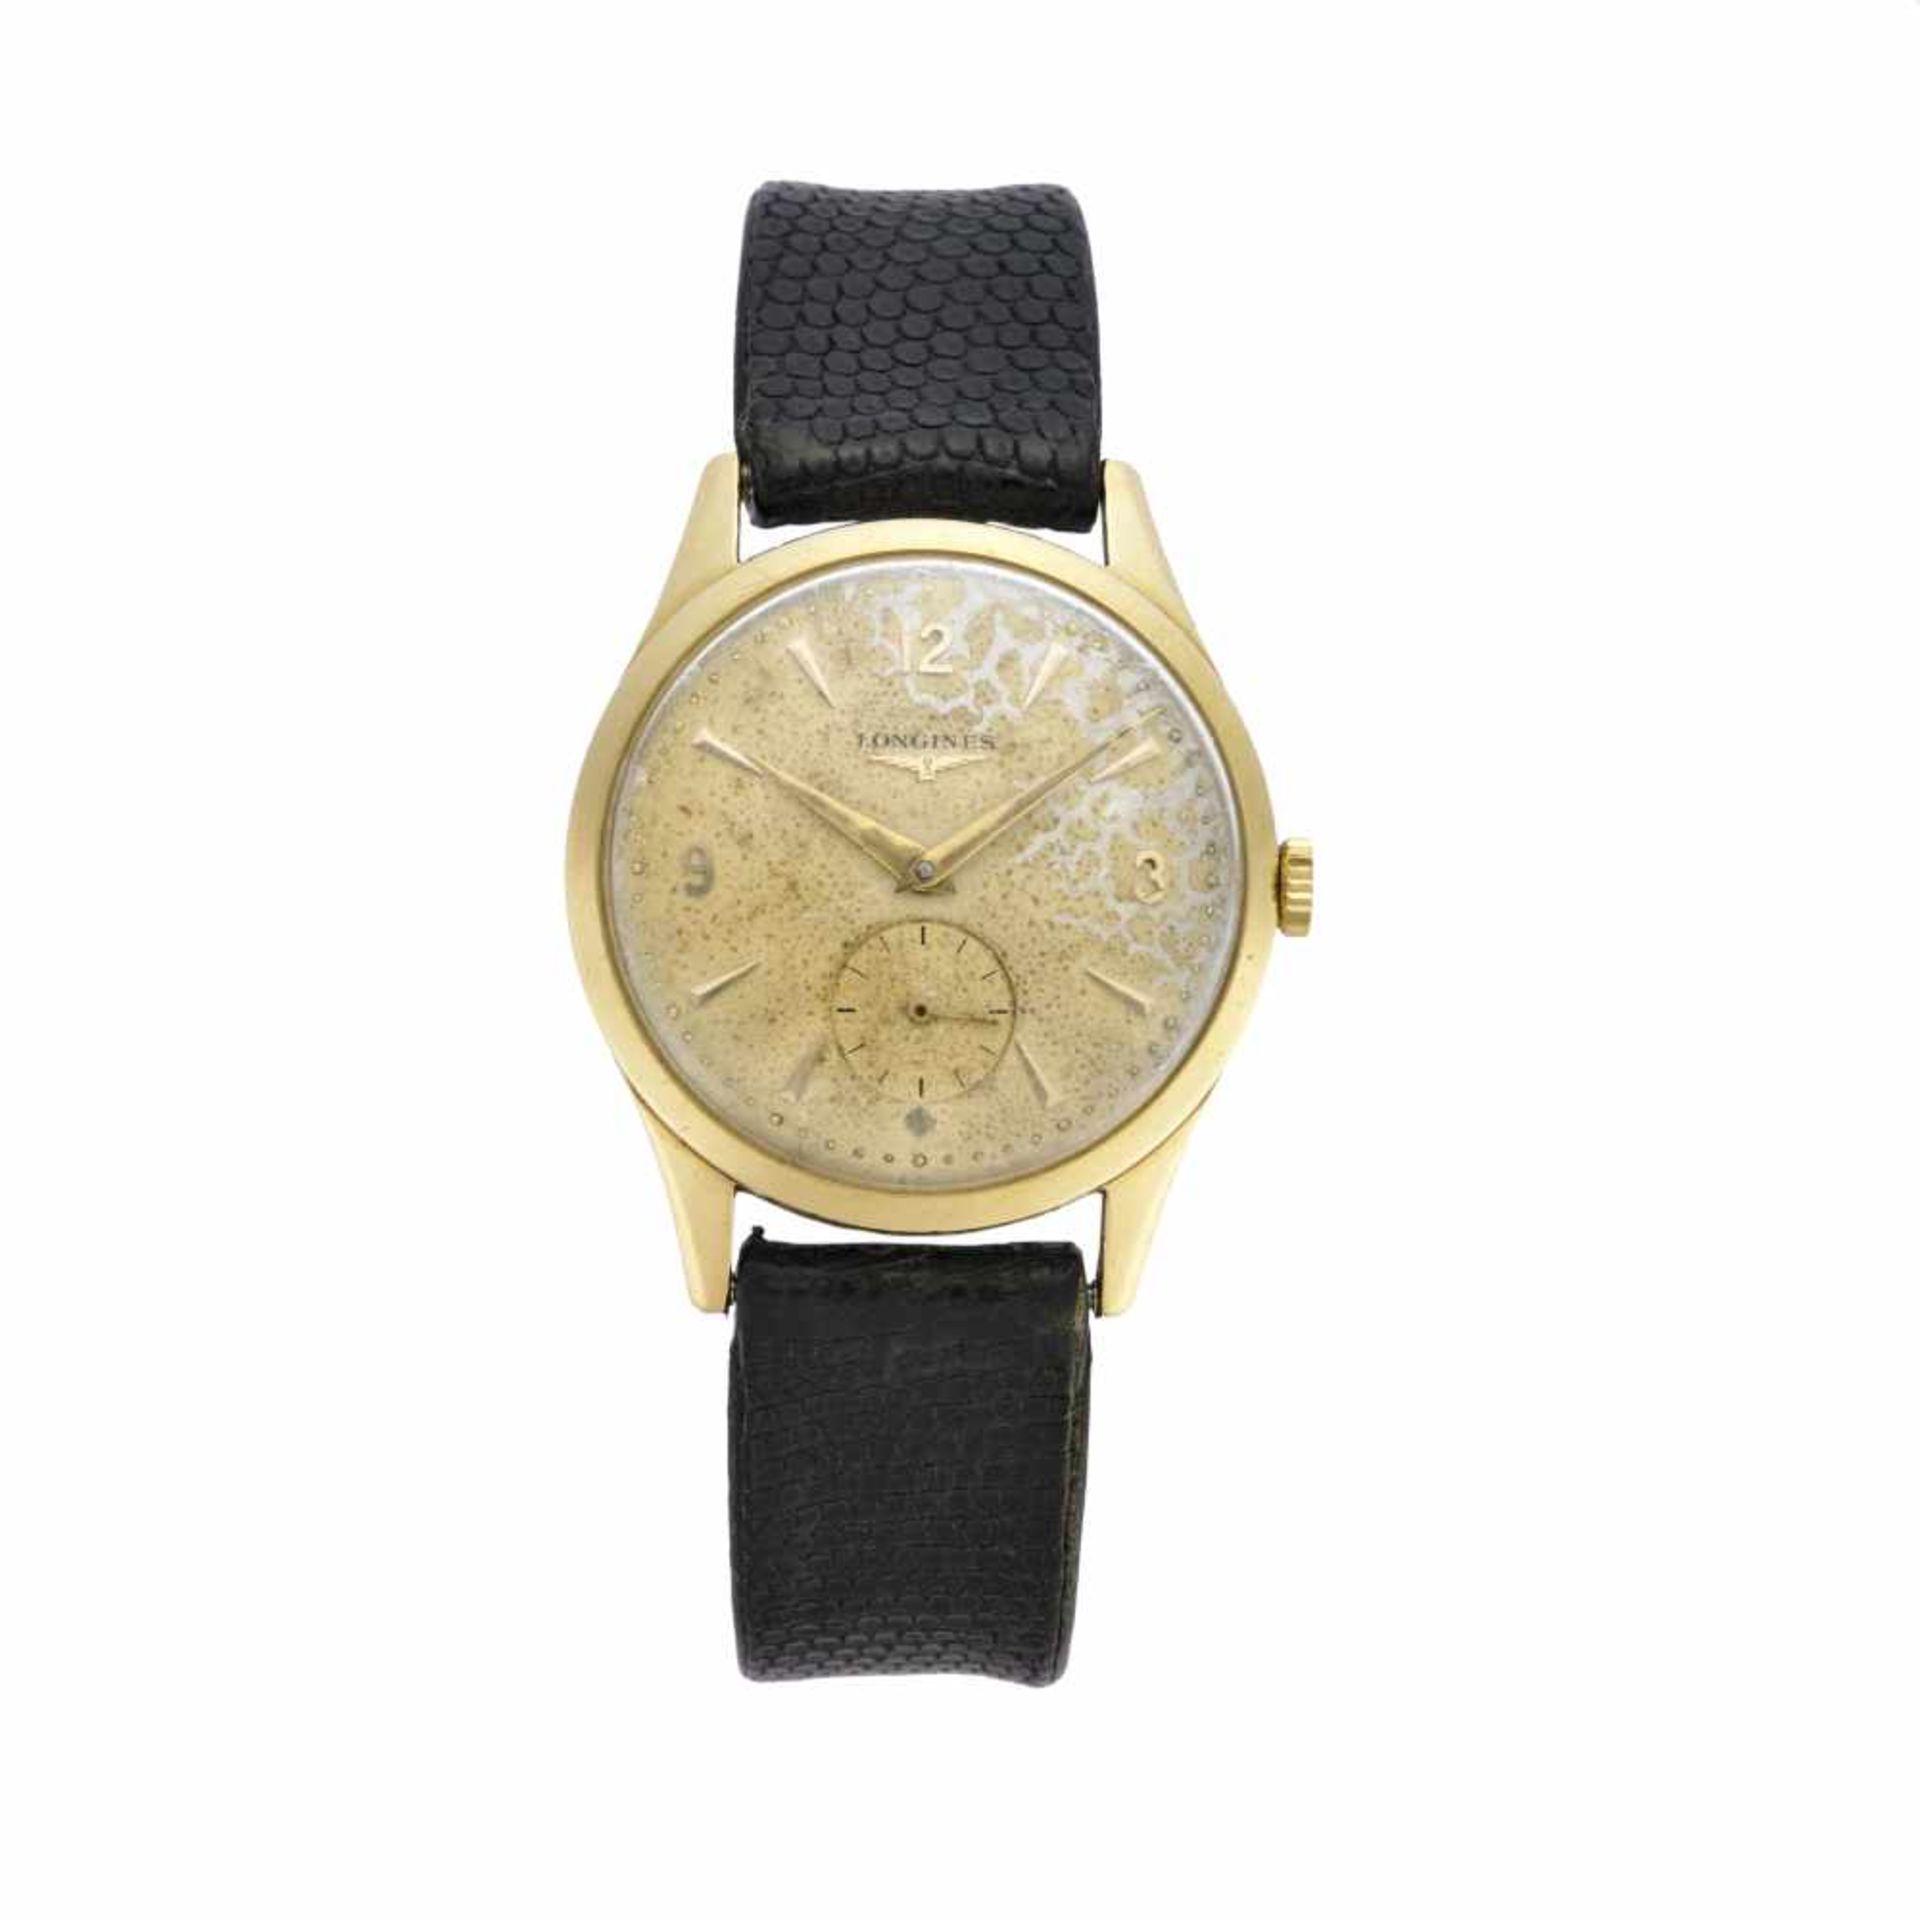 LONGINESGent's 18K gold wristwatch1960sDial, movement and case signedManual-wind movementSilvered